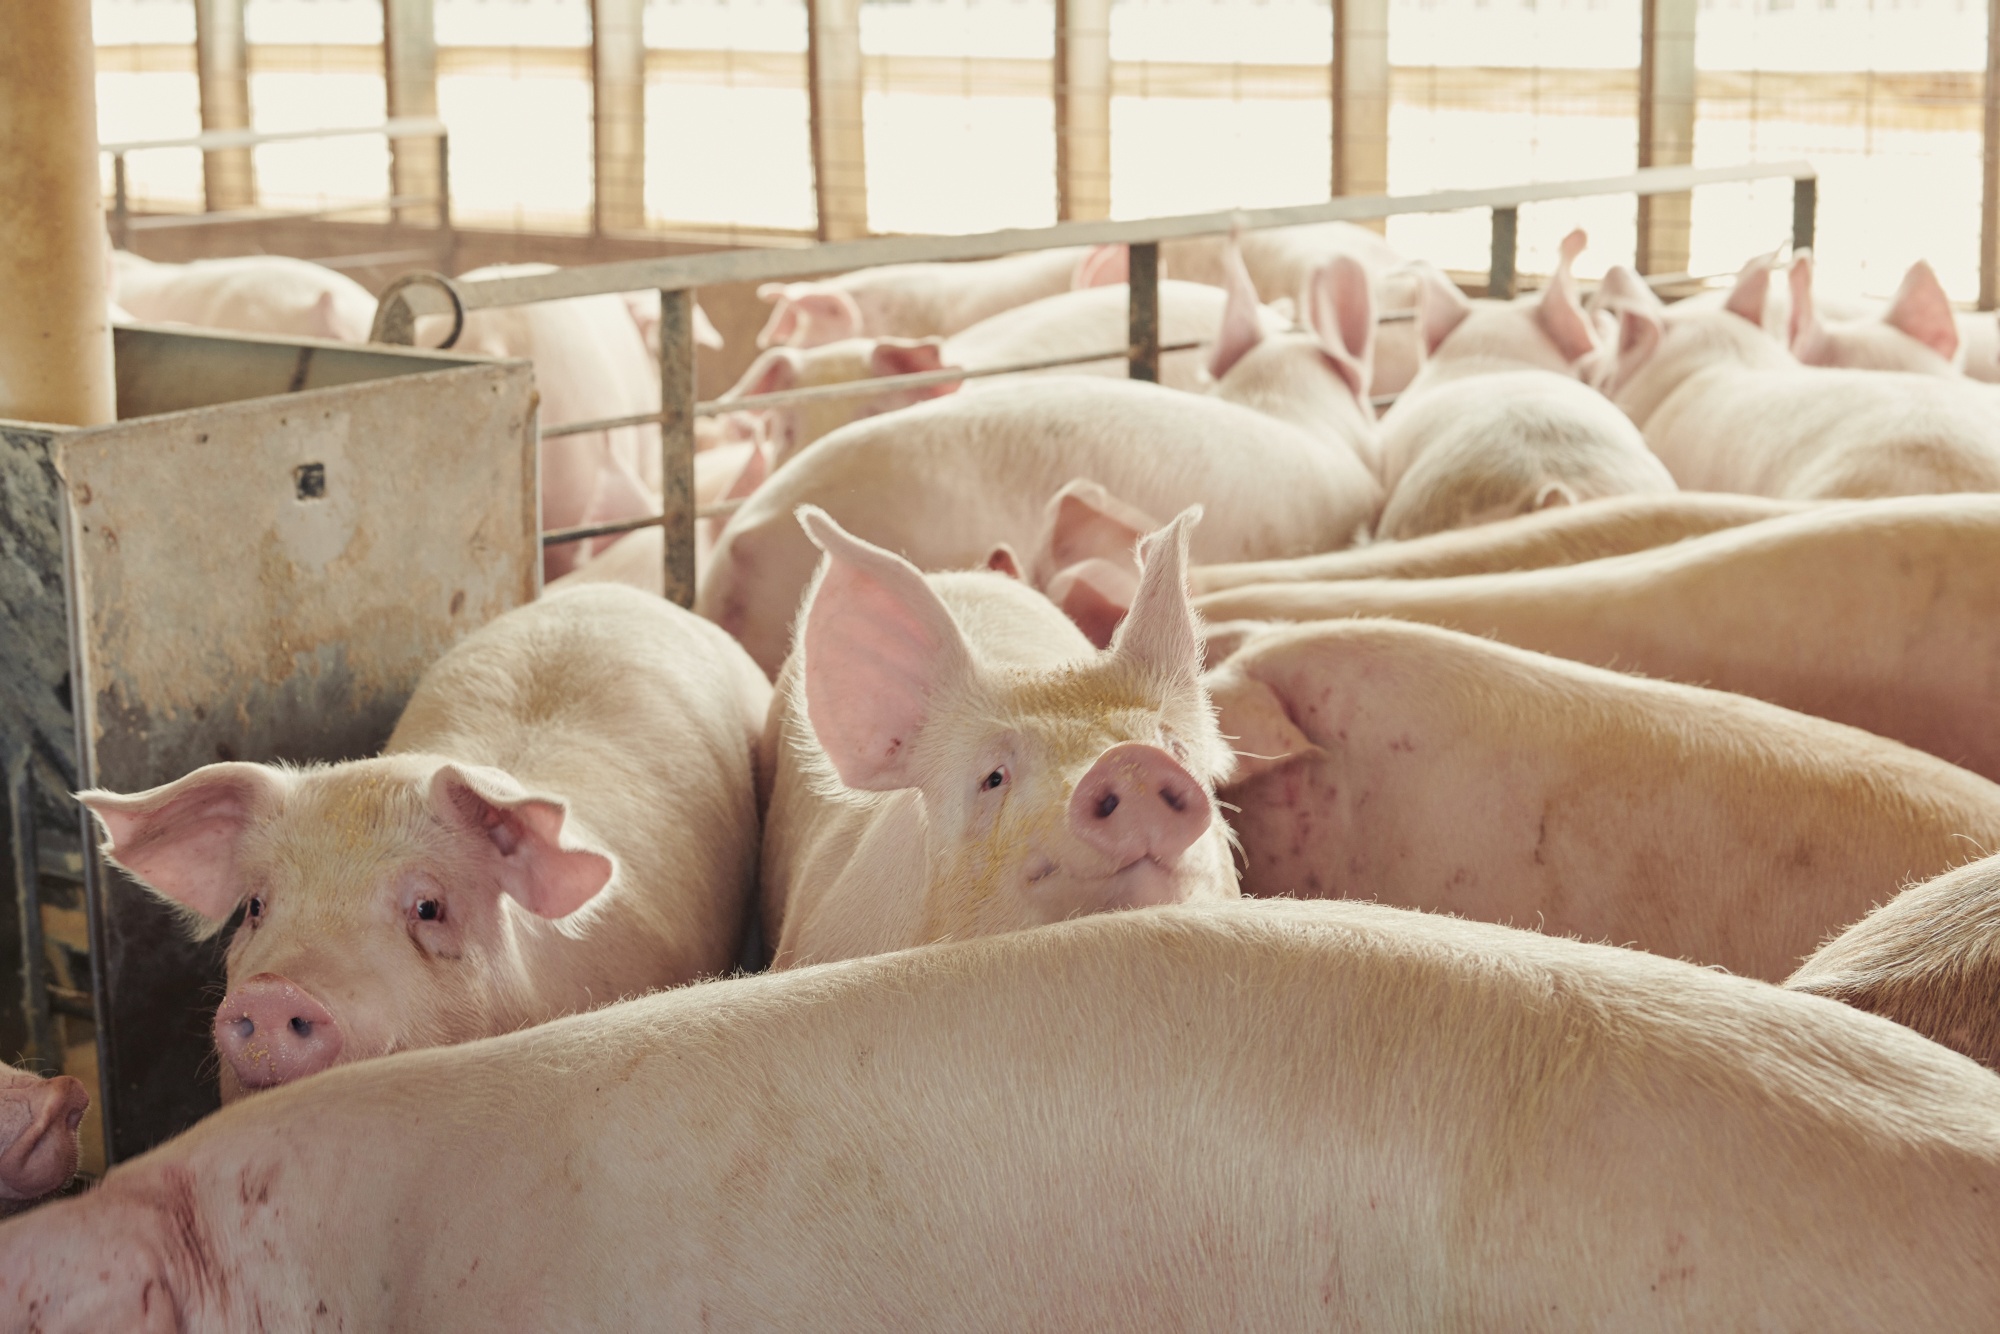 Pigs stand in a pen at a farm near Le Mars, Iowa.